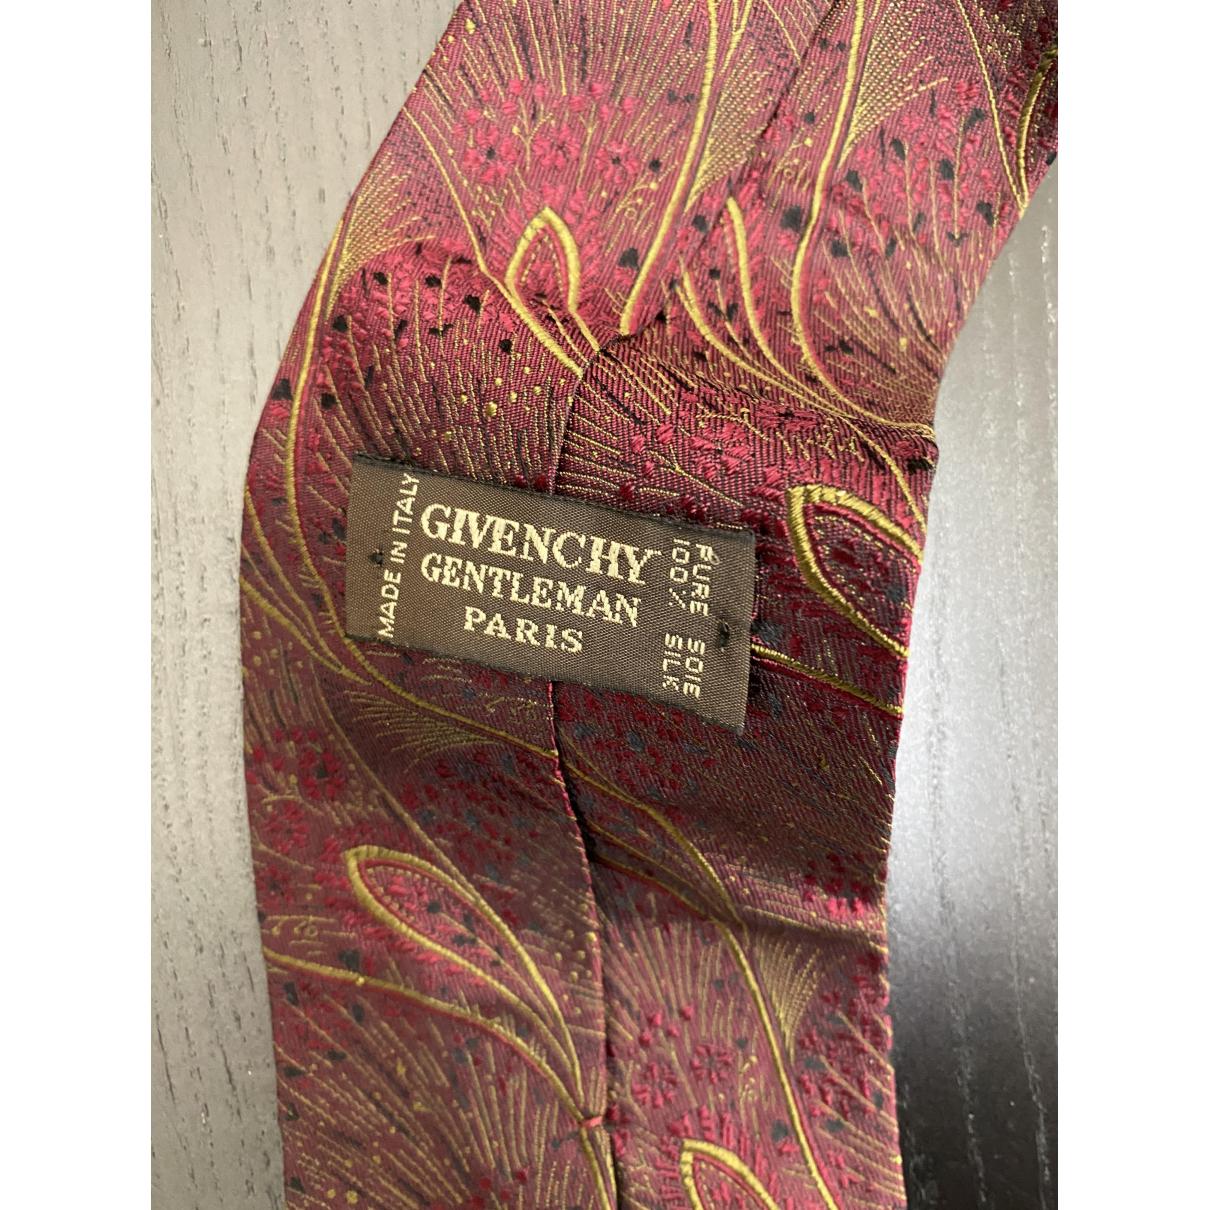 Buy Givenchy Tie online - Vintage